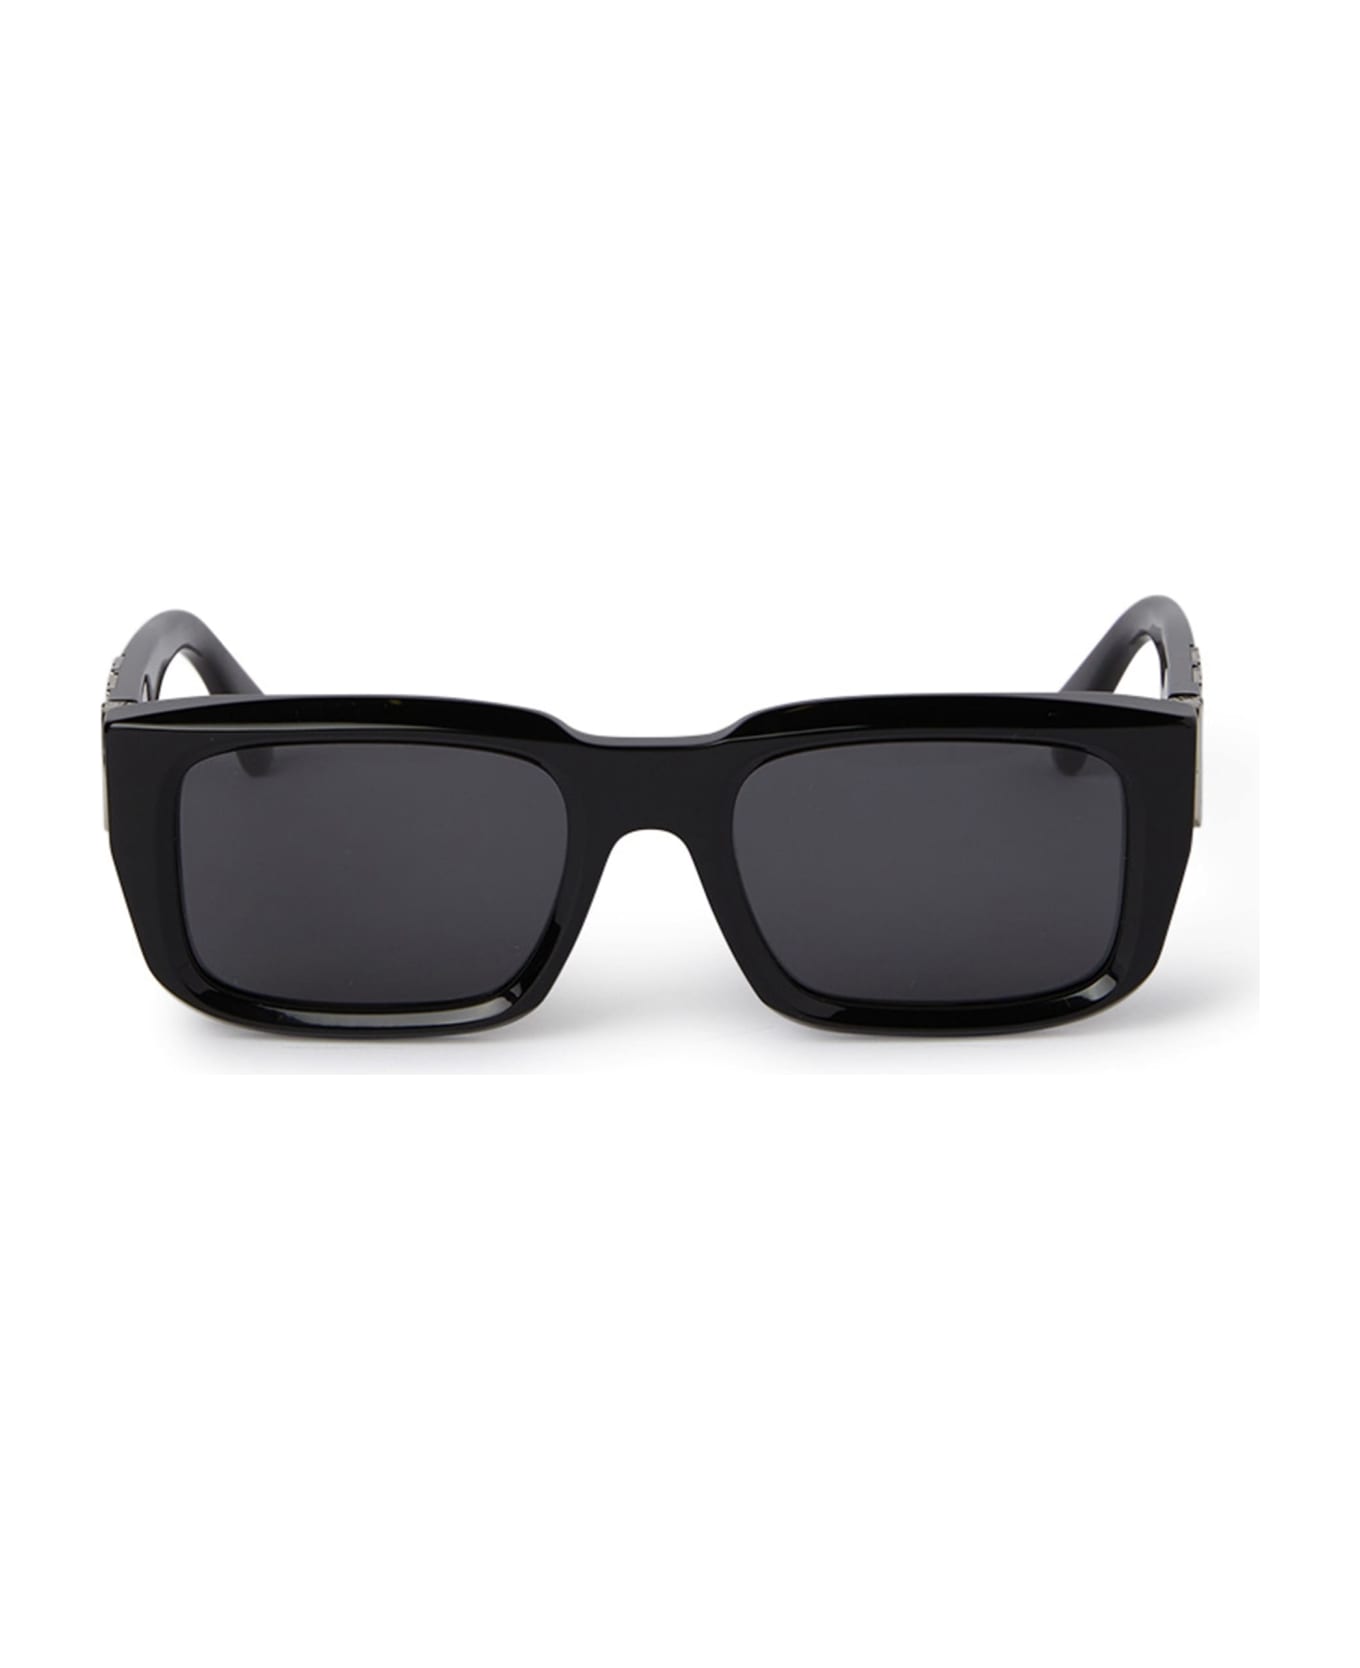 Off-White Hays - Black / Dark Grey Sunglasses - Black